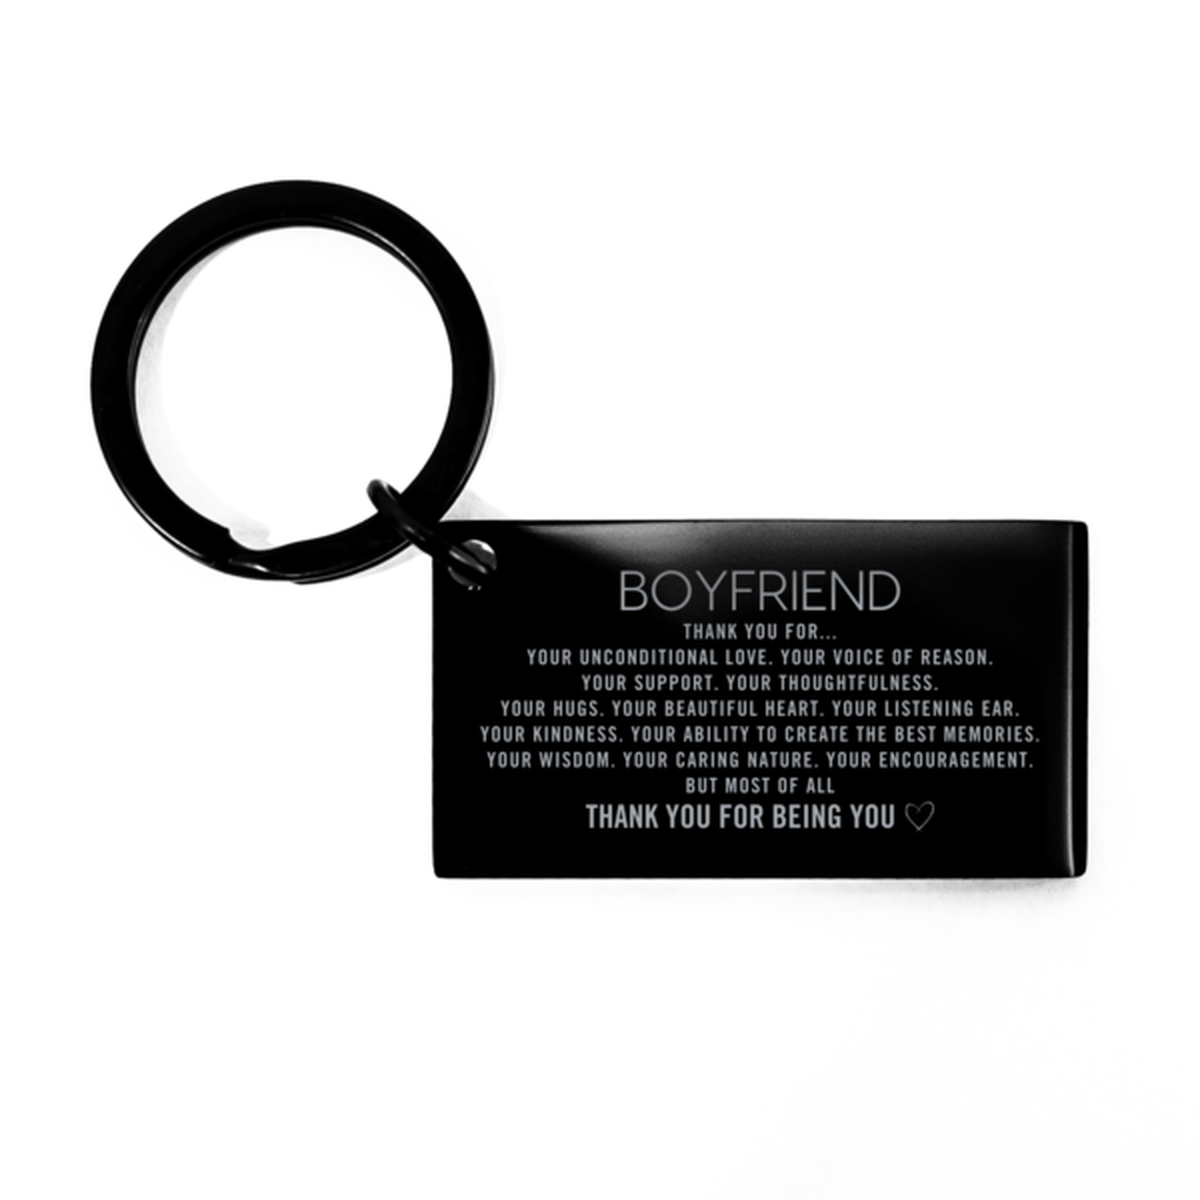 Boyfriend Keychain Custom, Engraved Gifts For Boyfriend Christmas Graduation Birthday Gifts for Men Women Boyfriend Thank you for Your unconditional love